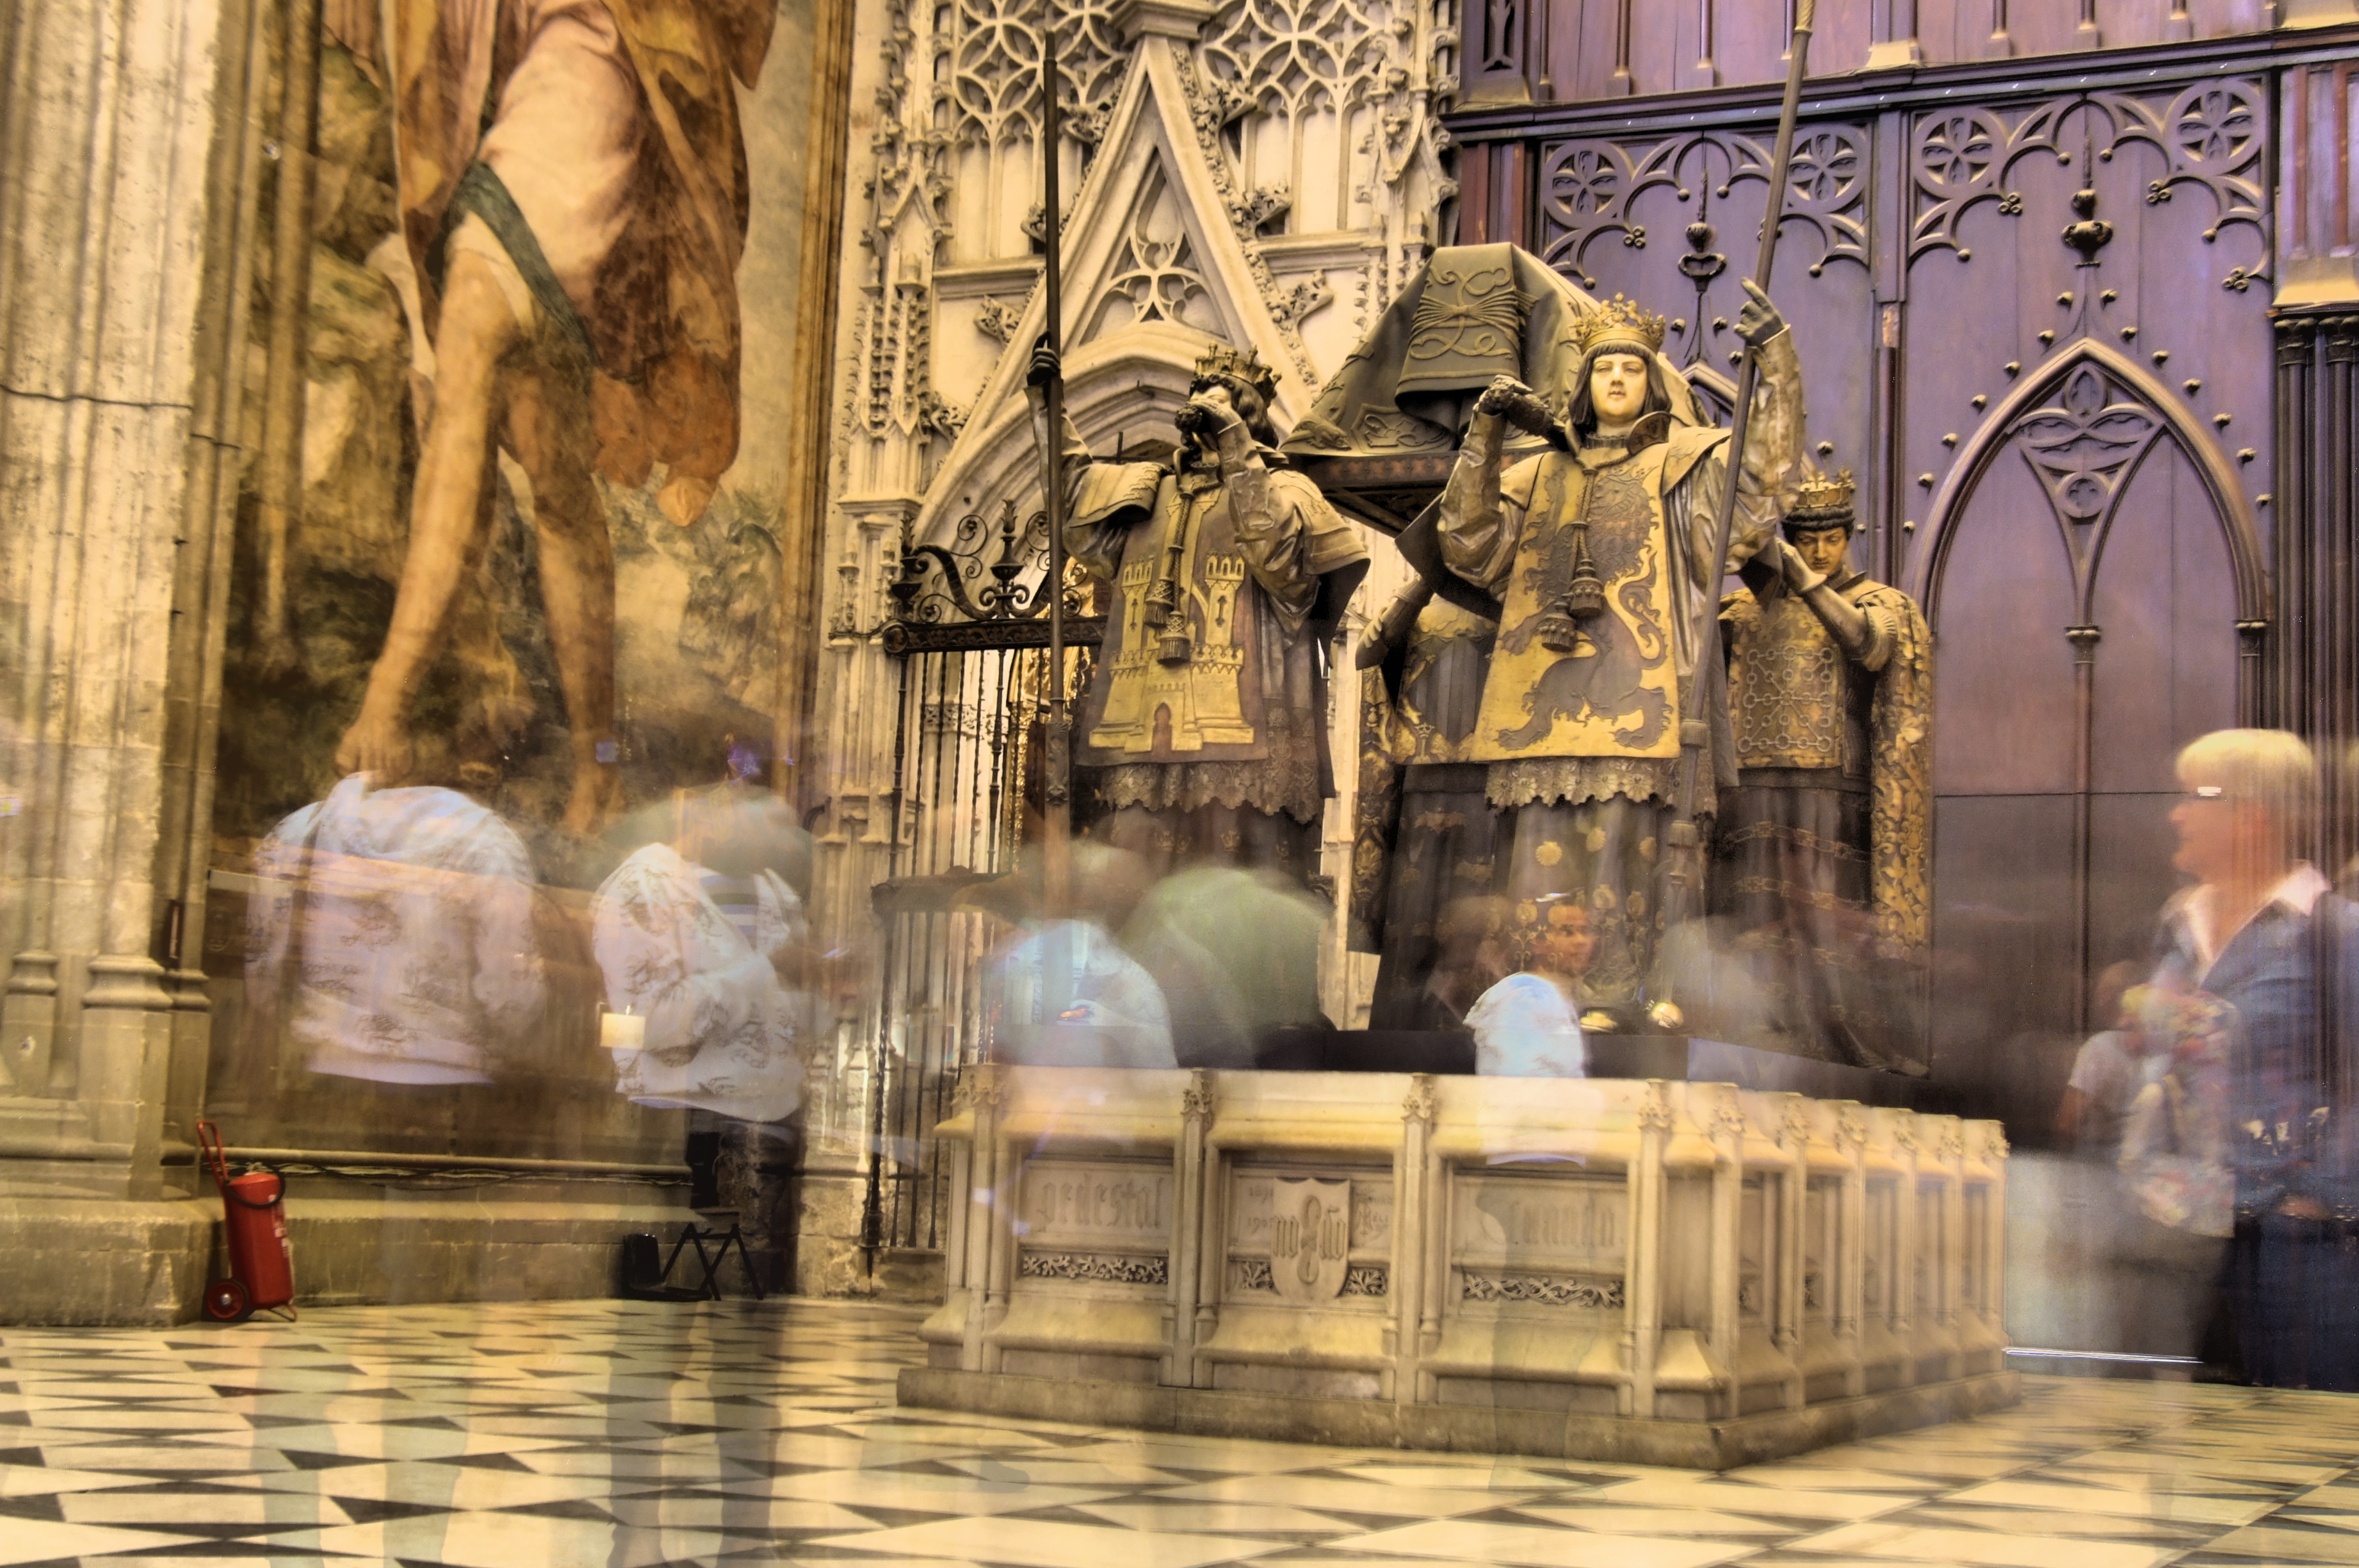 Photograph: Christopher Columbus Sevilla Cathedral